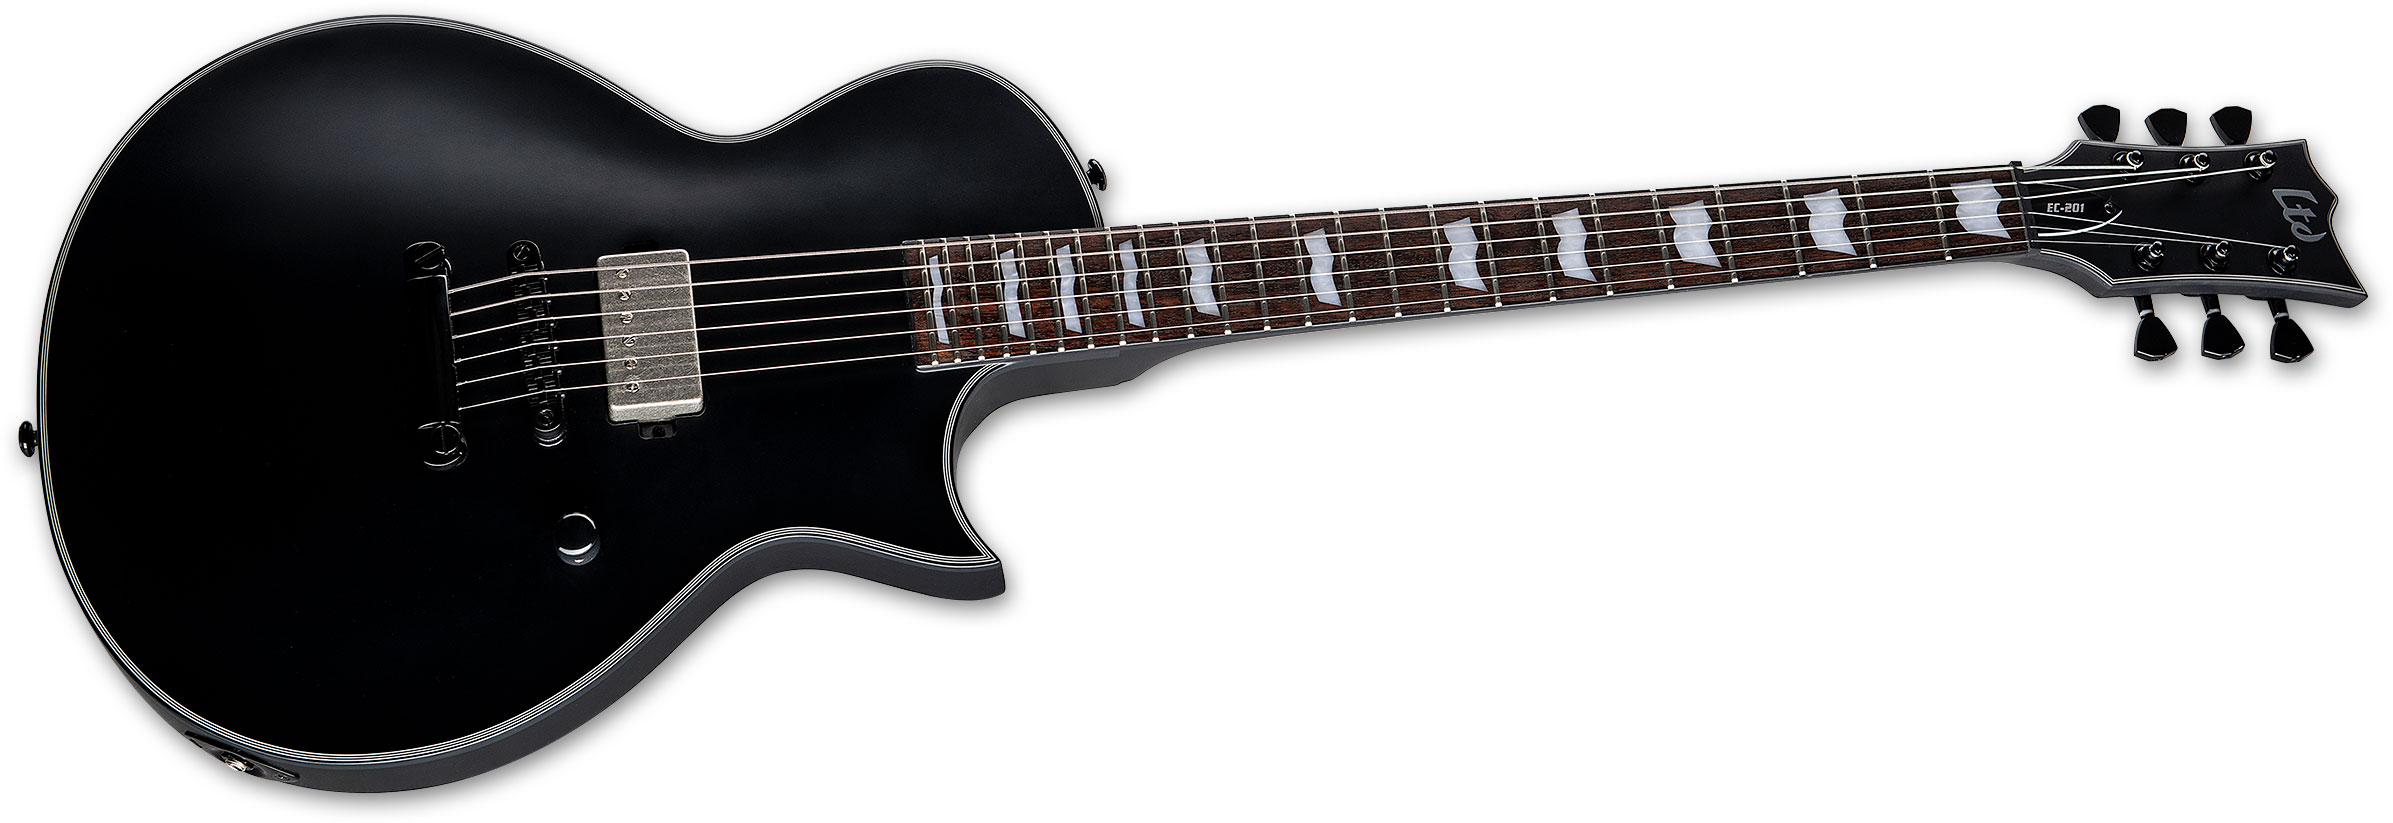 Ltd Ec-201 1h Ht Jat - Black Satin - Guitarra eléctrica de corte único. - Variation 1